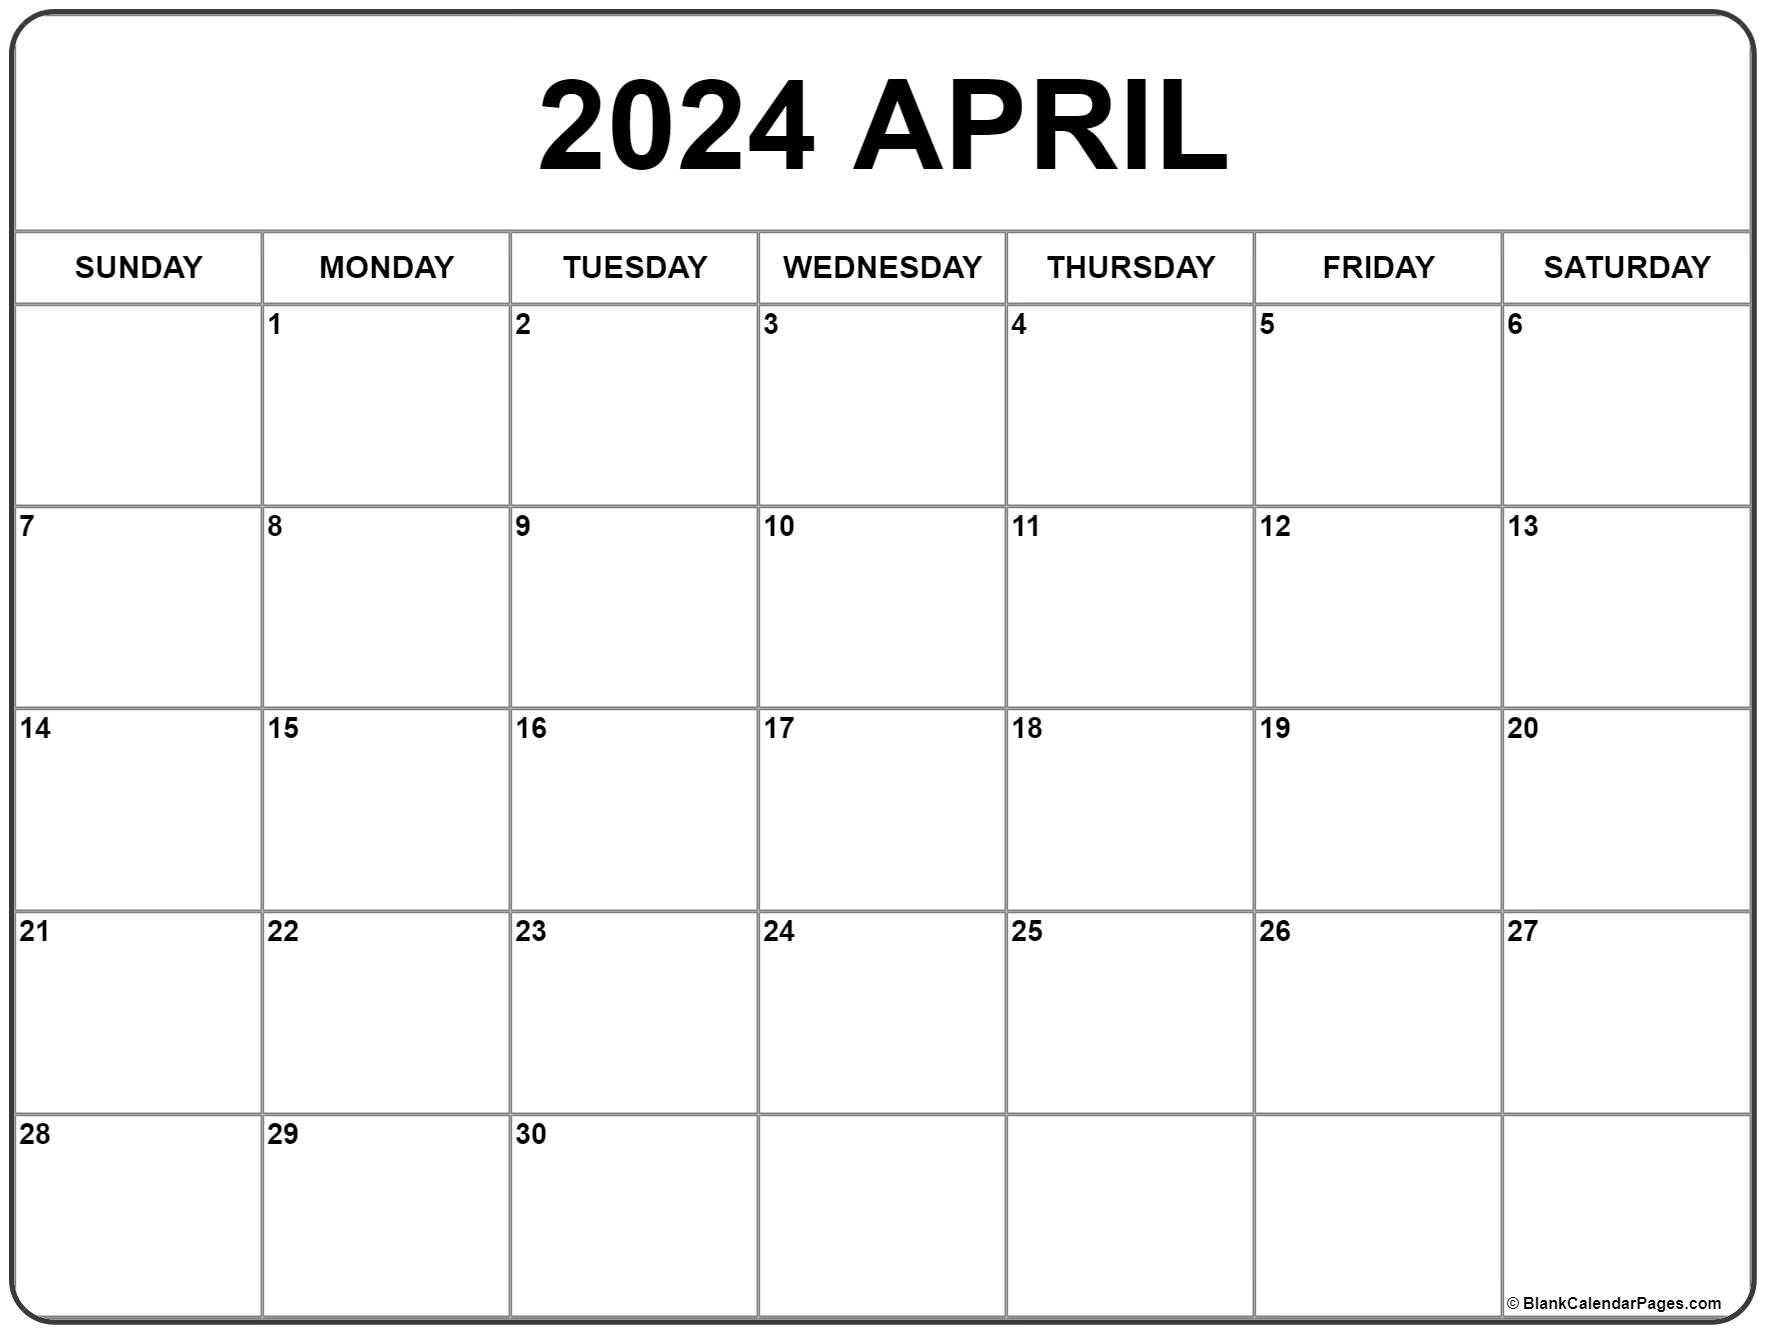 April 2024 Calendar | Free Printable Calendar regarding Free Printable April 2024 Calendar